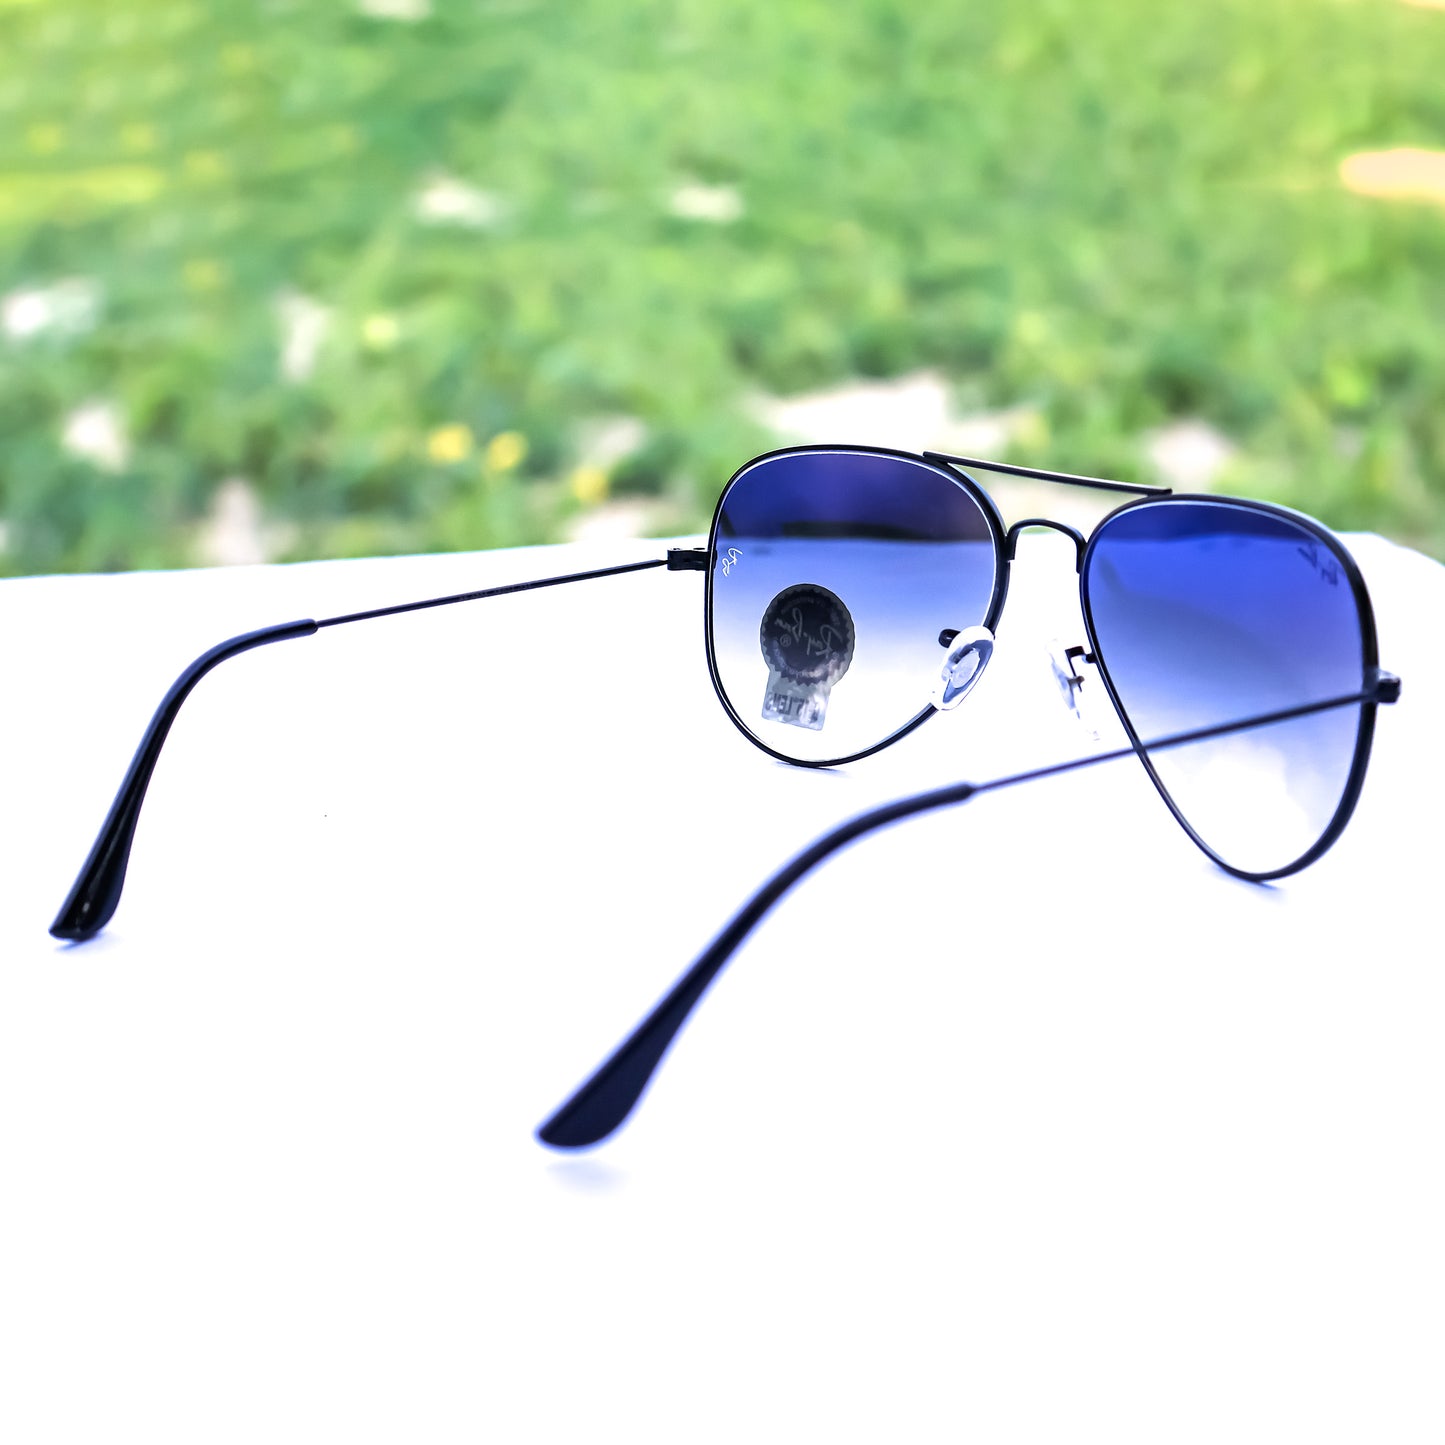 Jiebo Blue Mercury Aviator Sunglasses